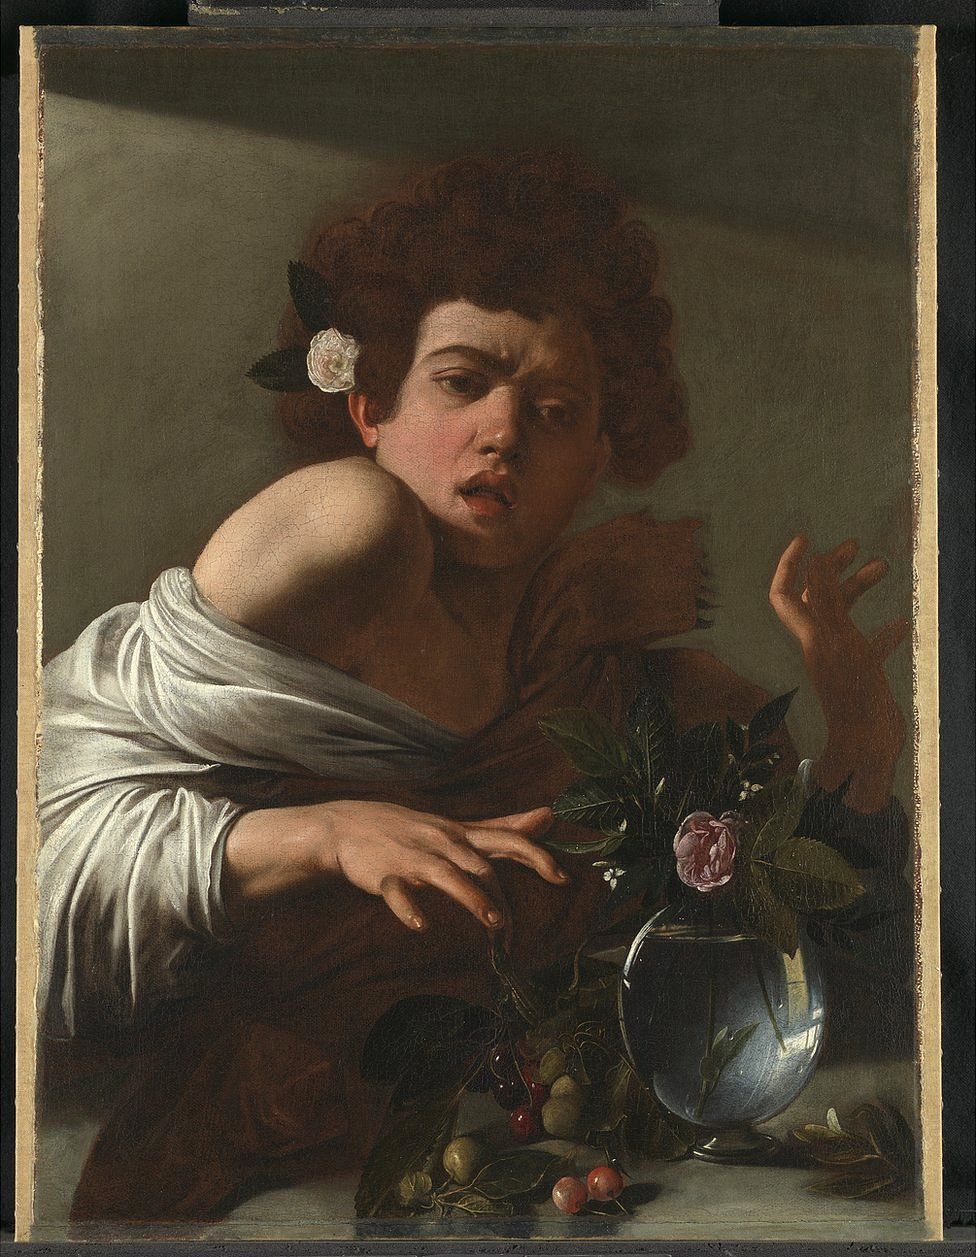 Boy Bitten by a Lizard by Caravaggio